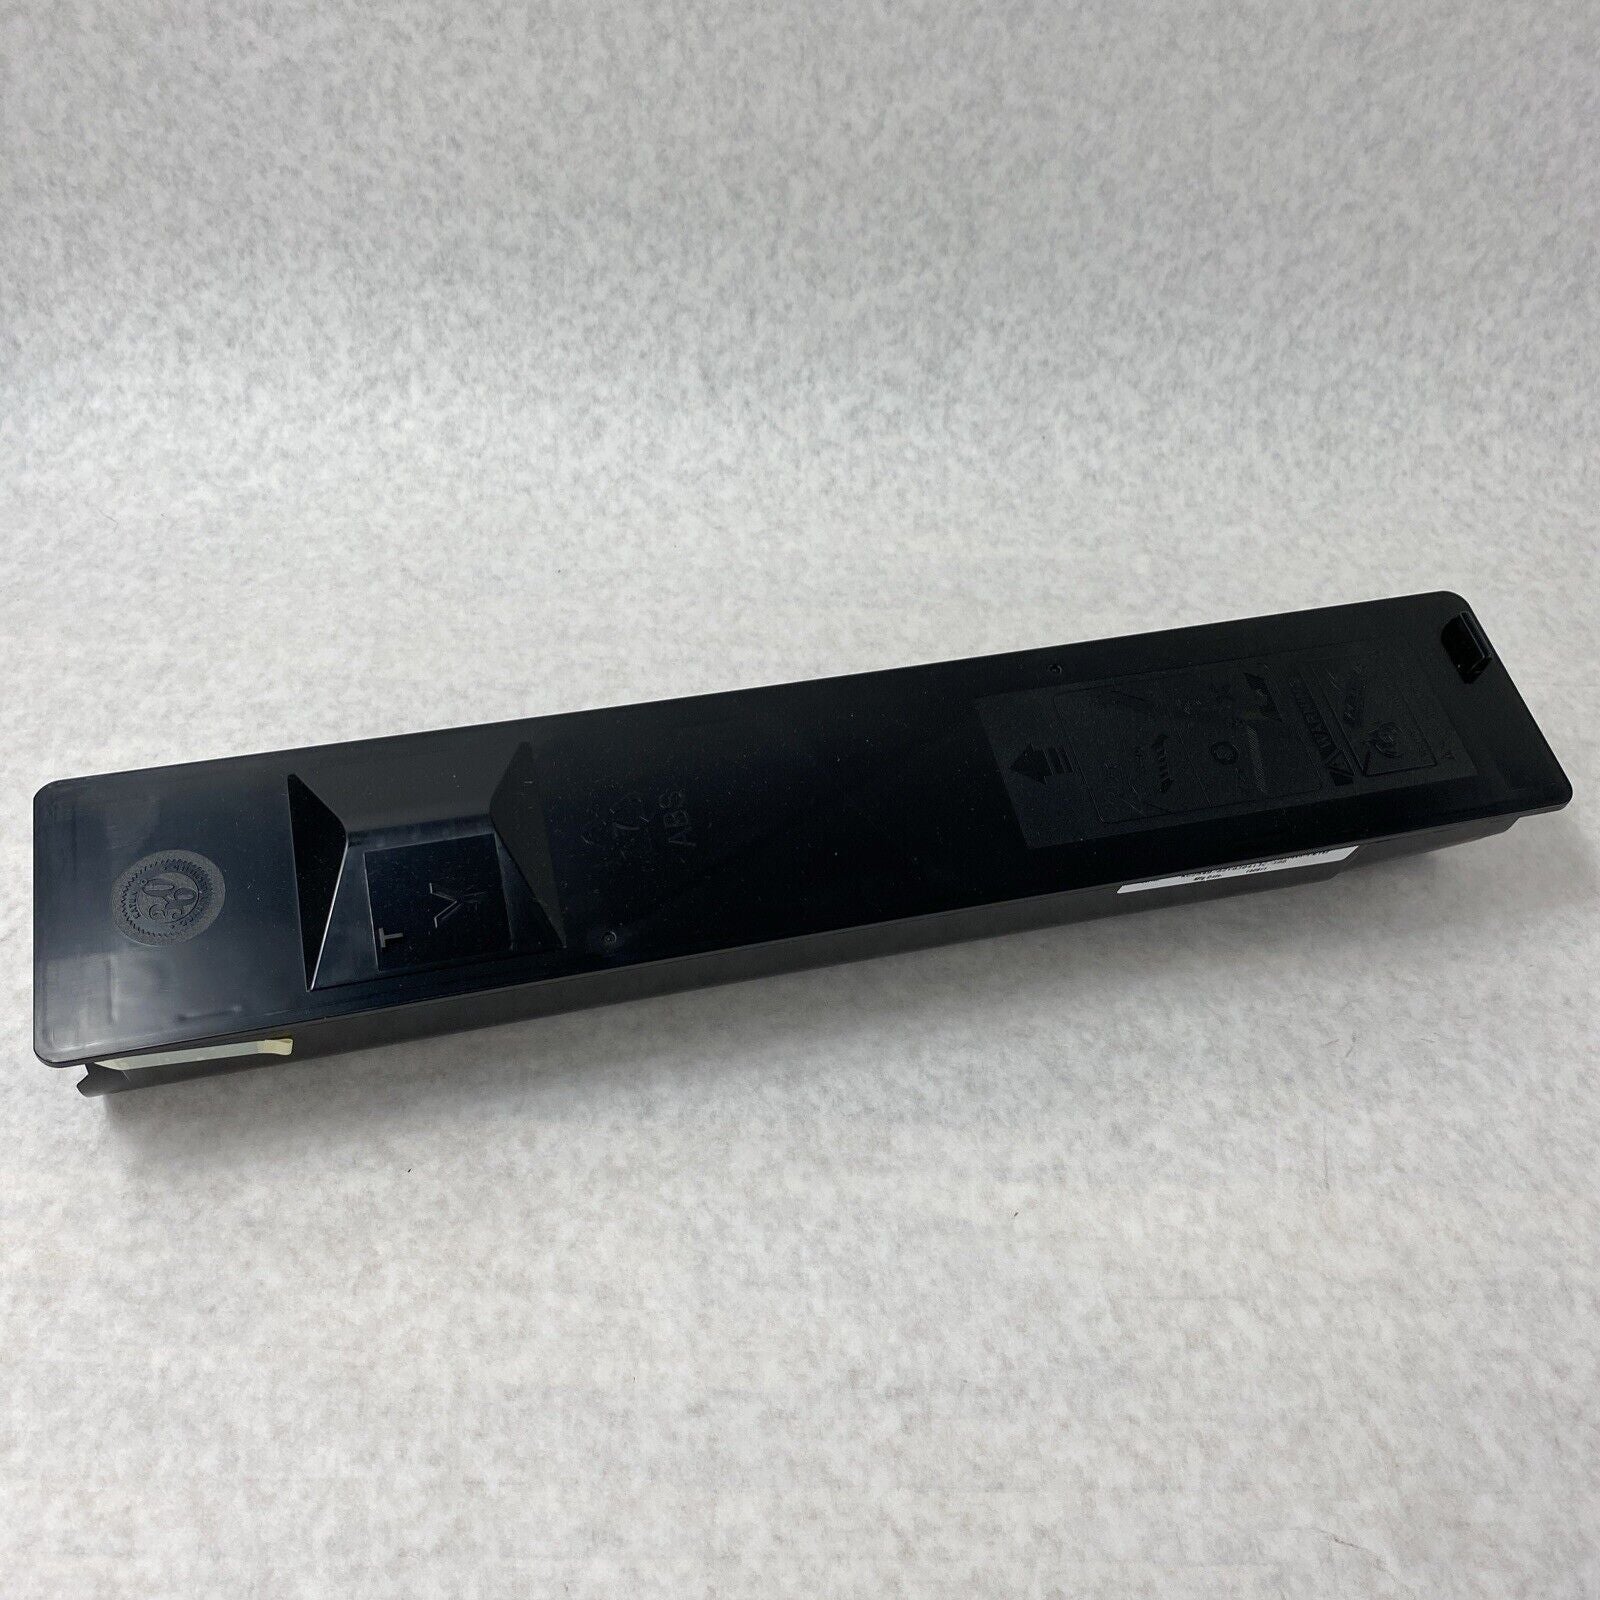 Katun TFC50UY Compatible Yellow Toner Cartridge For Toshiba E-Studio Printers